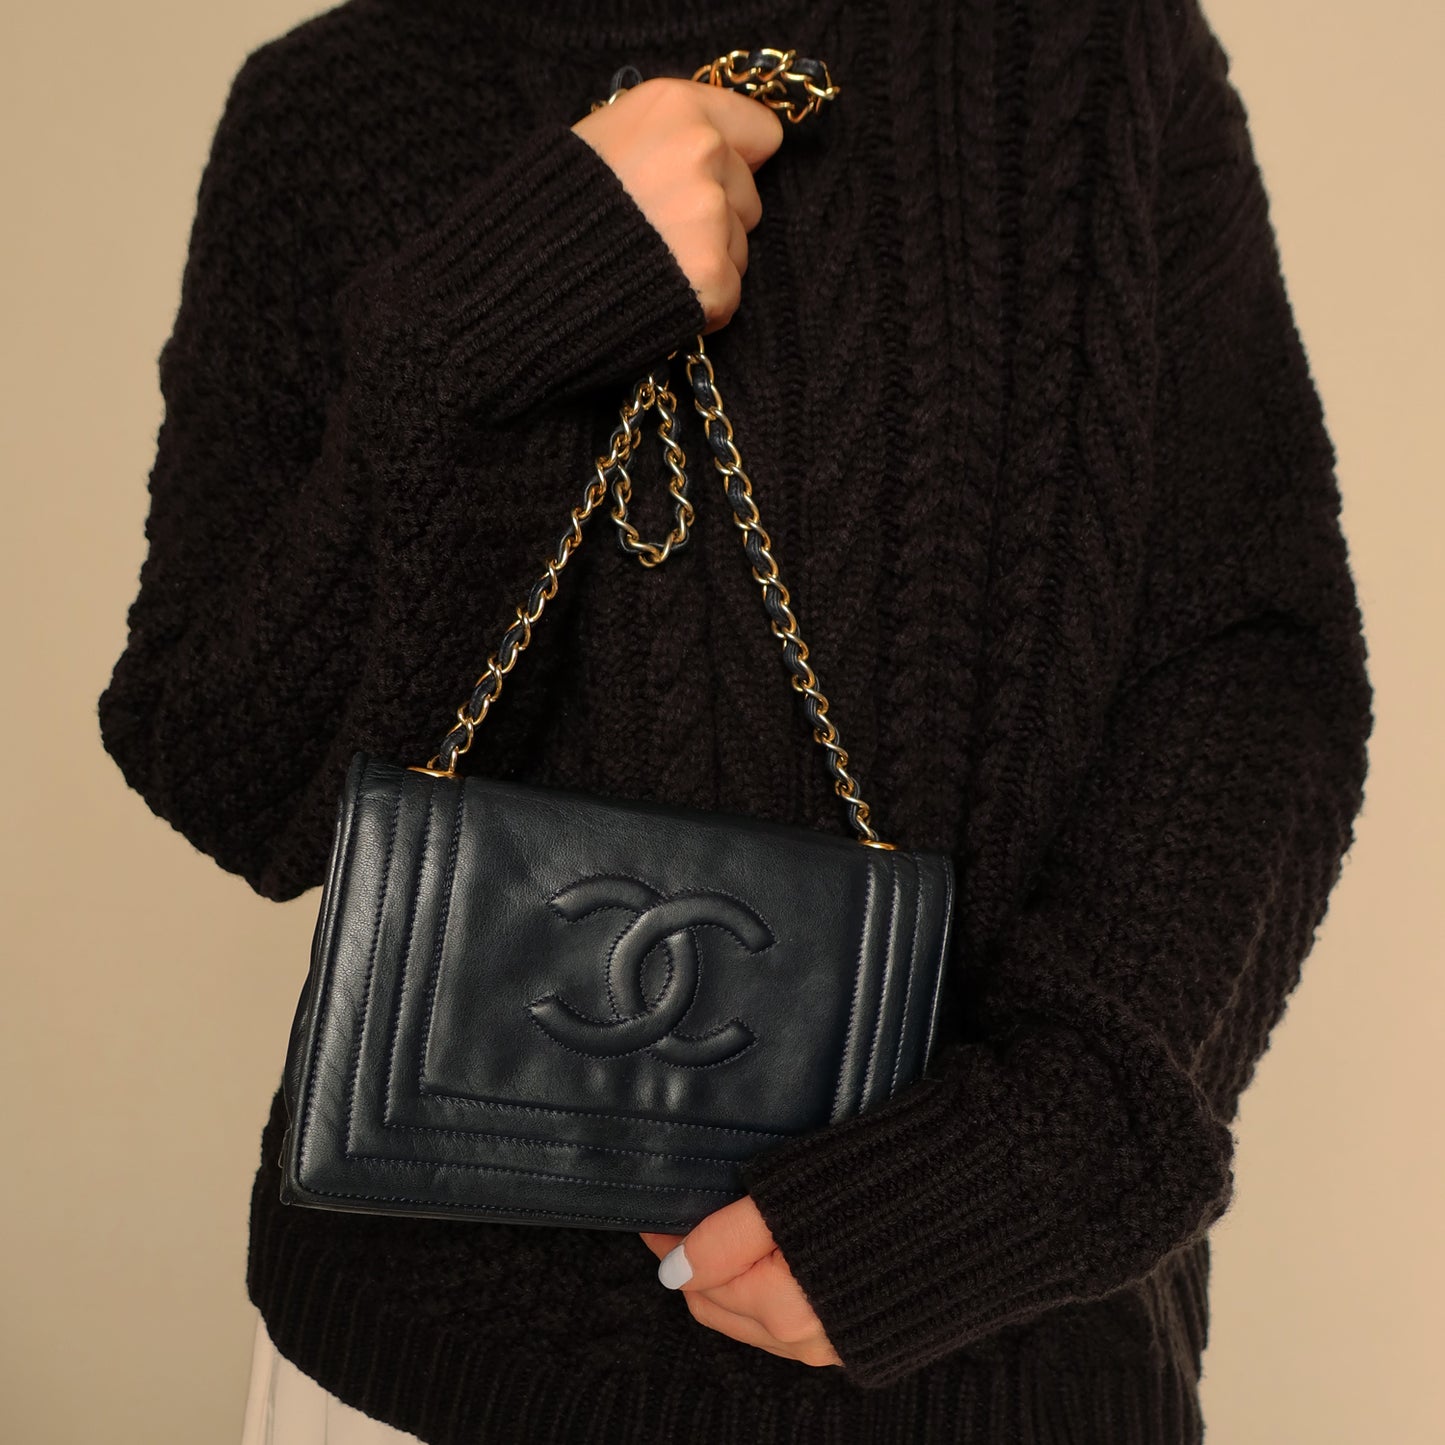 Chanel Vintage Dark Navy Lambskin CC Timeless Classic Flap Bag